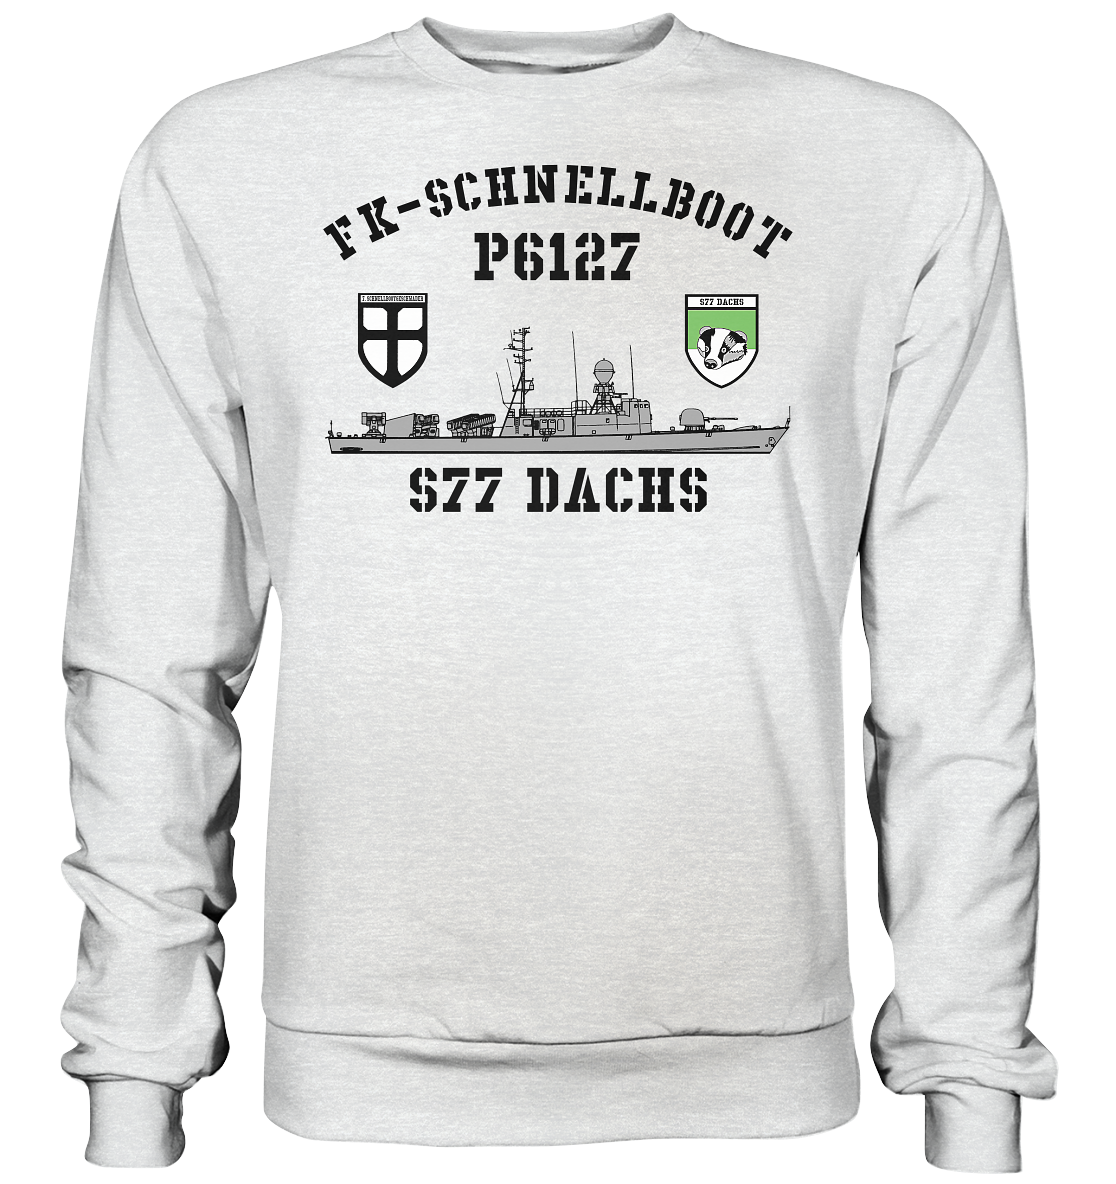 P6127 S77 DACHS 7.SG  - Premium Sweatshirt